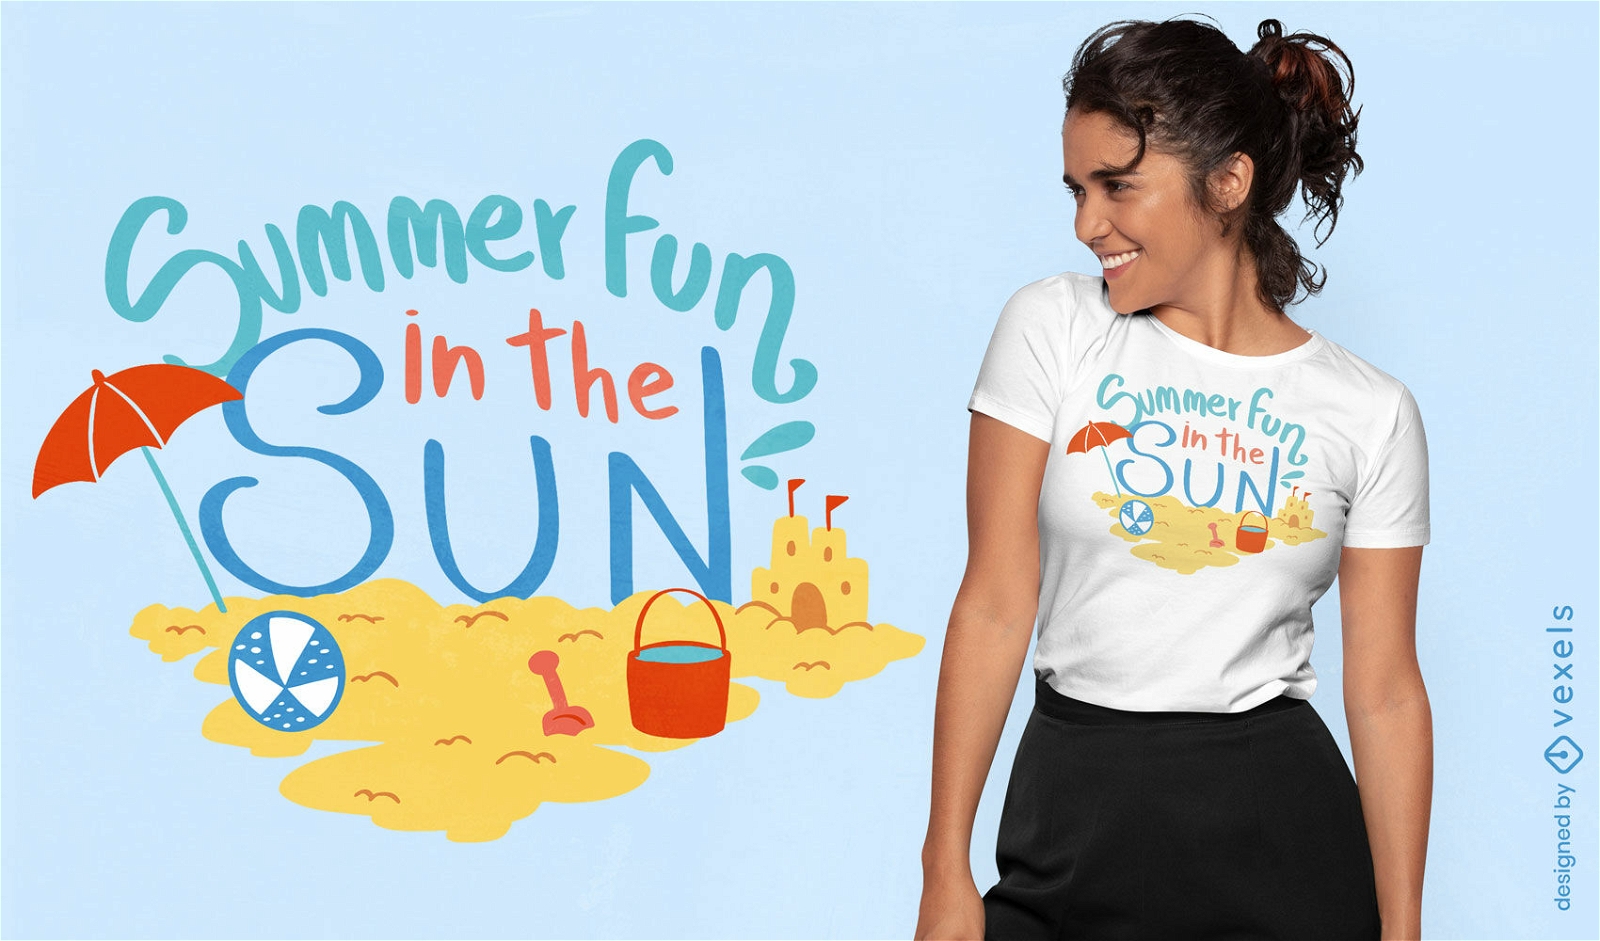 Summer fun in the sun lettering t-shirt design